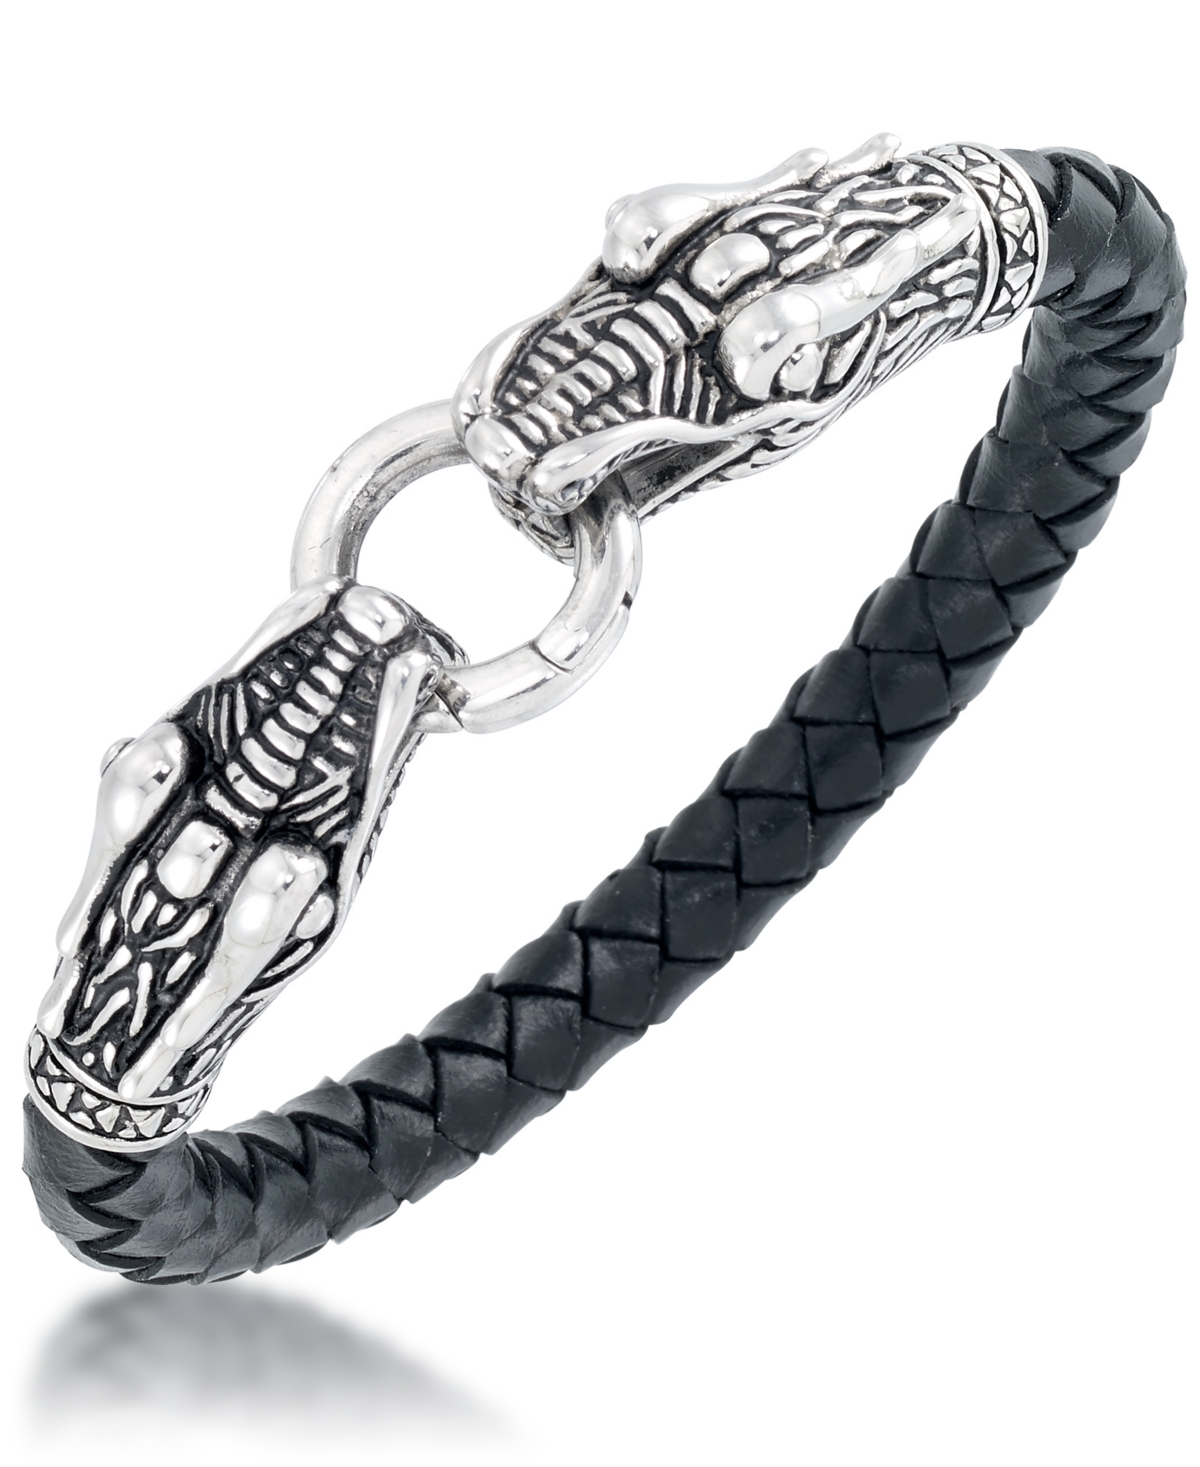 Men's Dragon Head Leather Bracelet in Stainless Steel - Stainless Steel